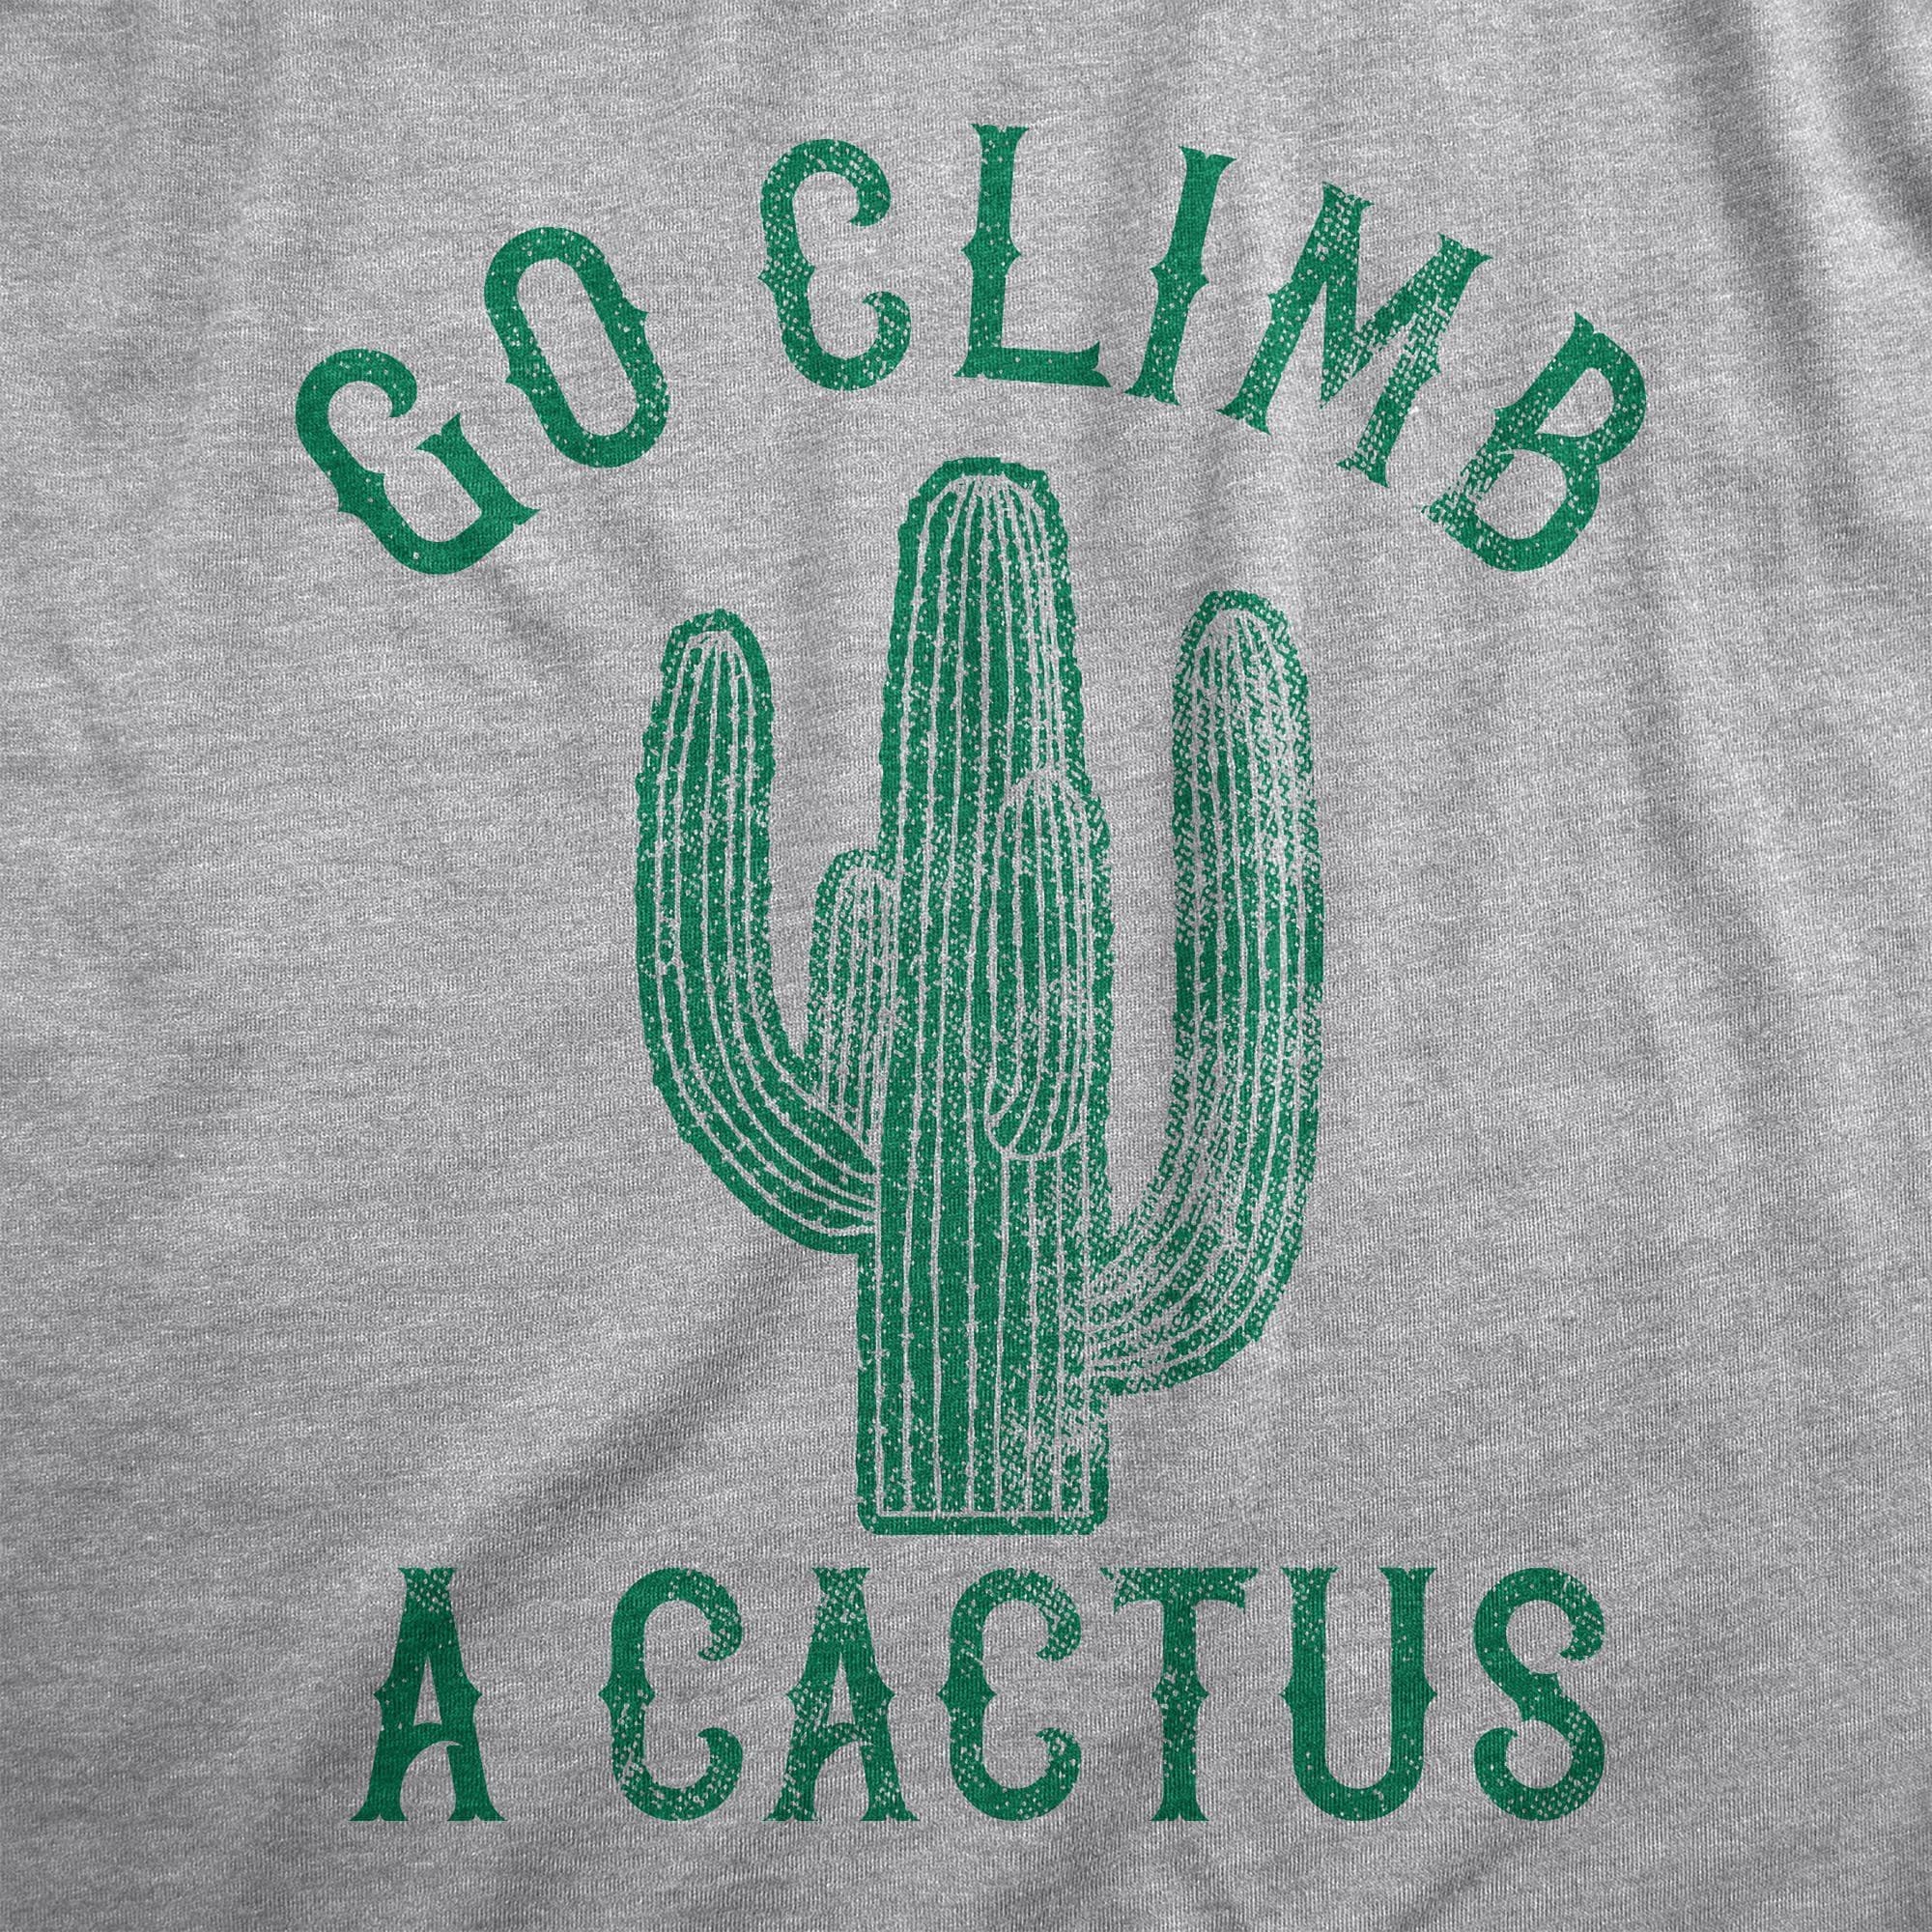 Go Climb A Cactus Women's Tshirt - Crazy Dog T-Shirts